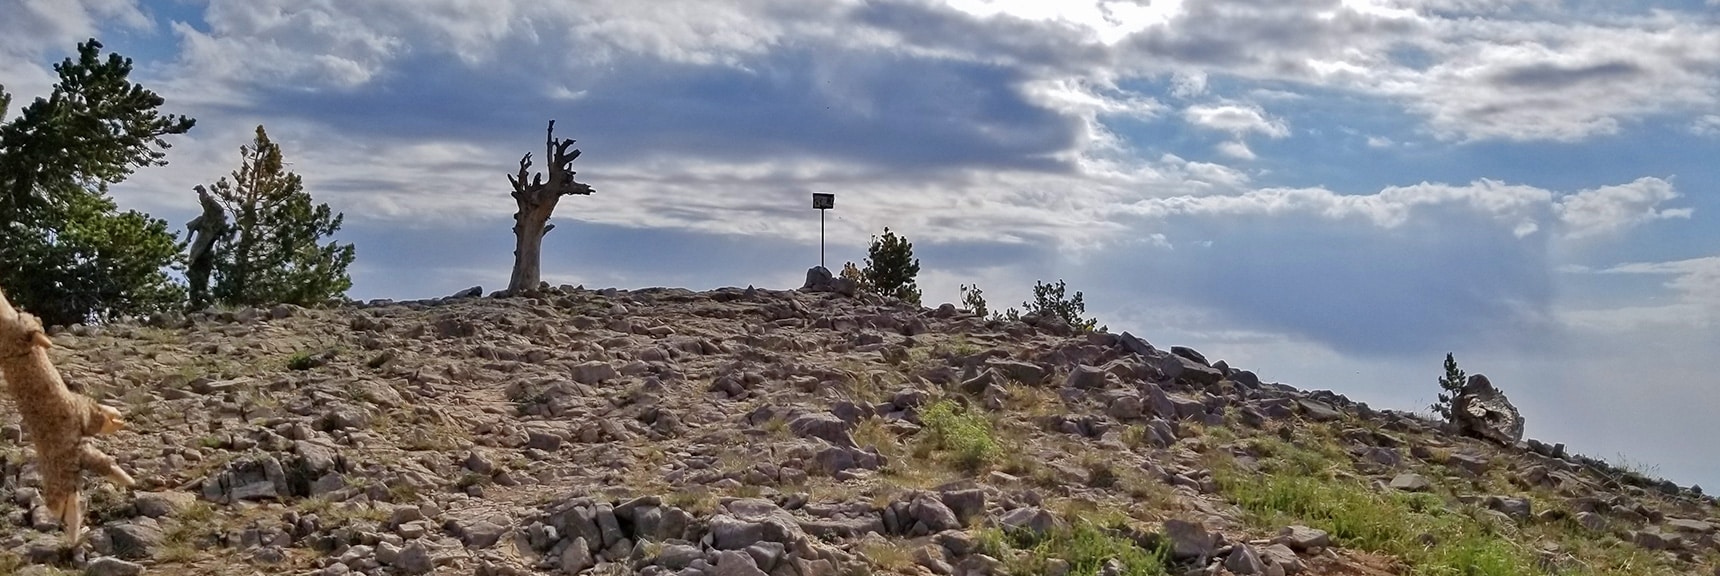 Arrival at Griffith Peak Summit - Summit Box on Pole | Sexton Ridge Descent from Griffith Peak, Mt. Charleston Wilderness, Spring Mountains, Nevada